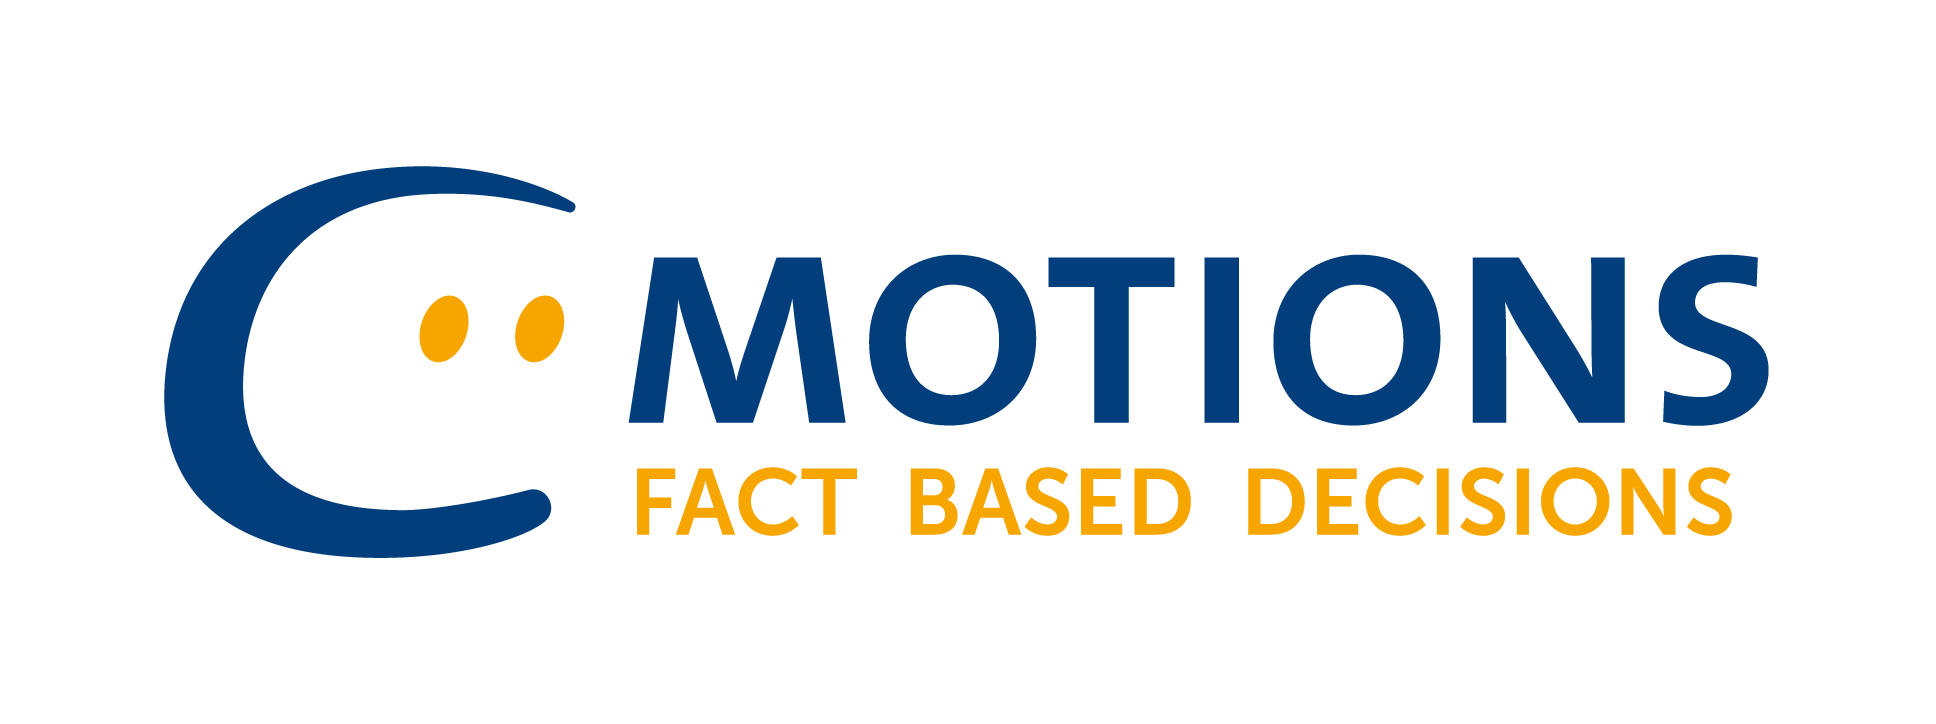 Cmotions logo